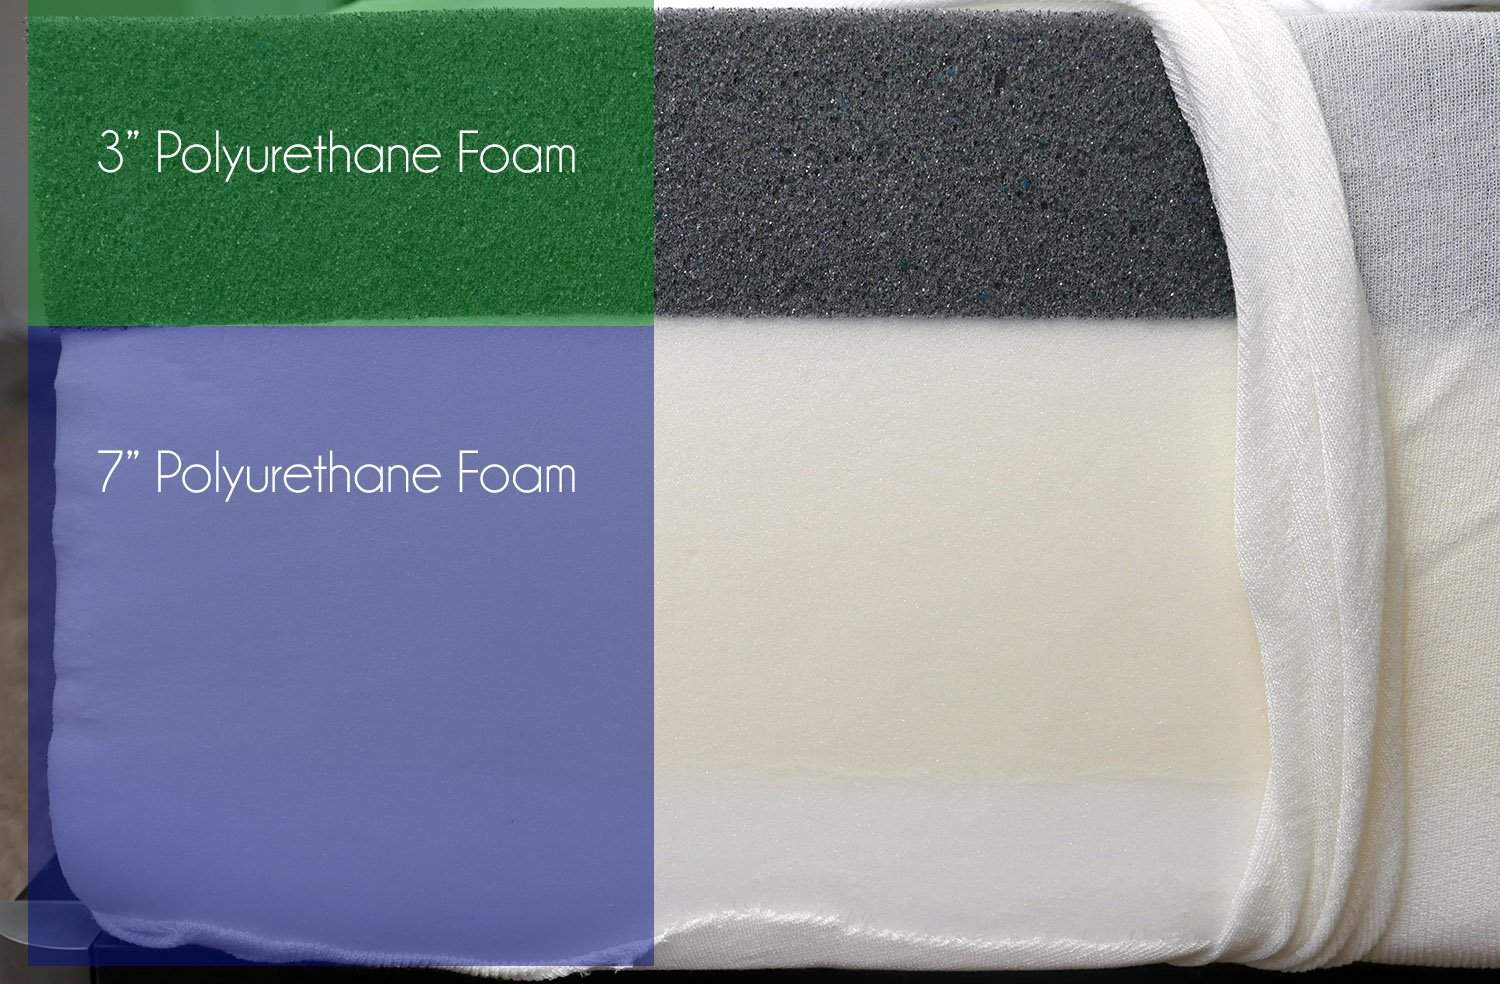 Tuft & Needle mattress layers (top to bottom) - 3" polyurethane foam, 7" polyurethane foam